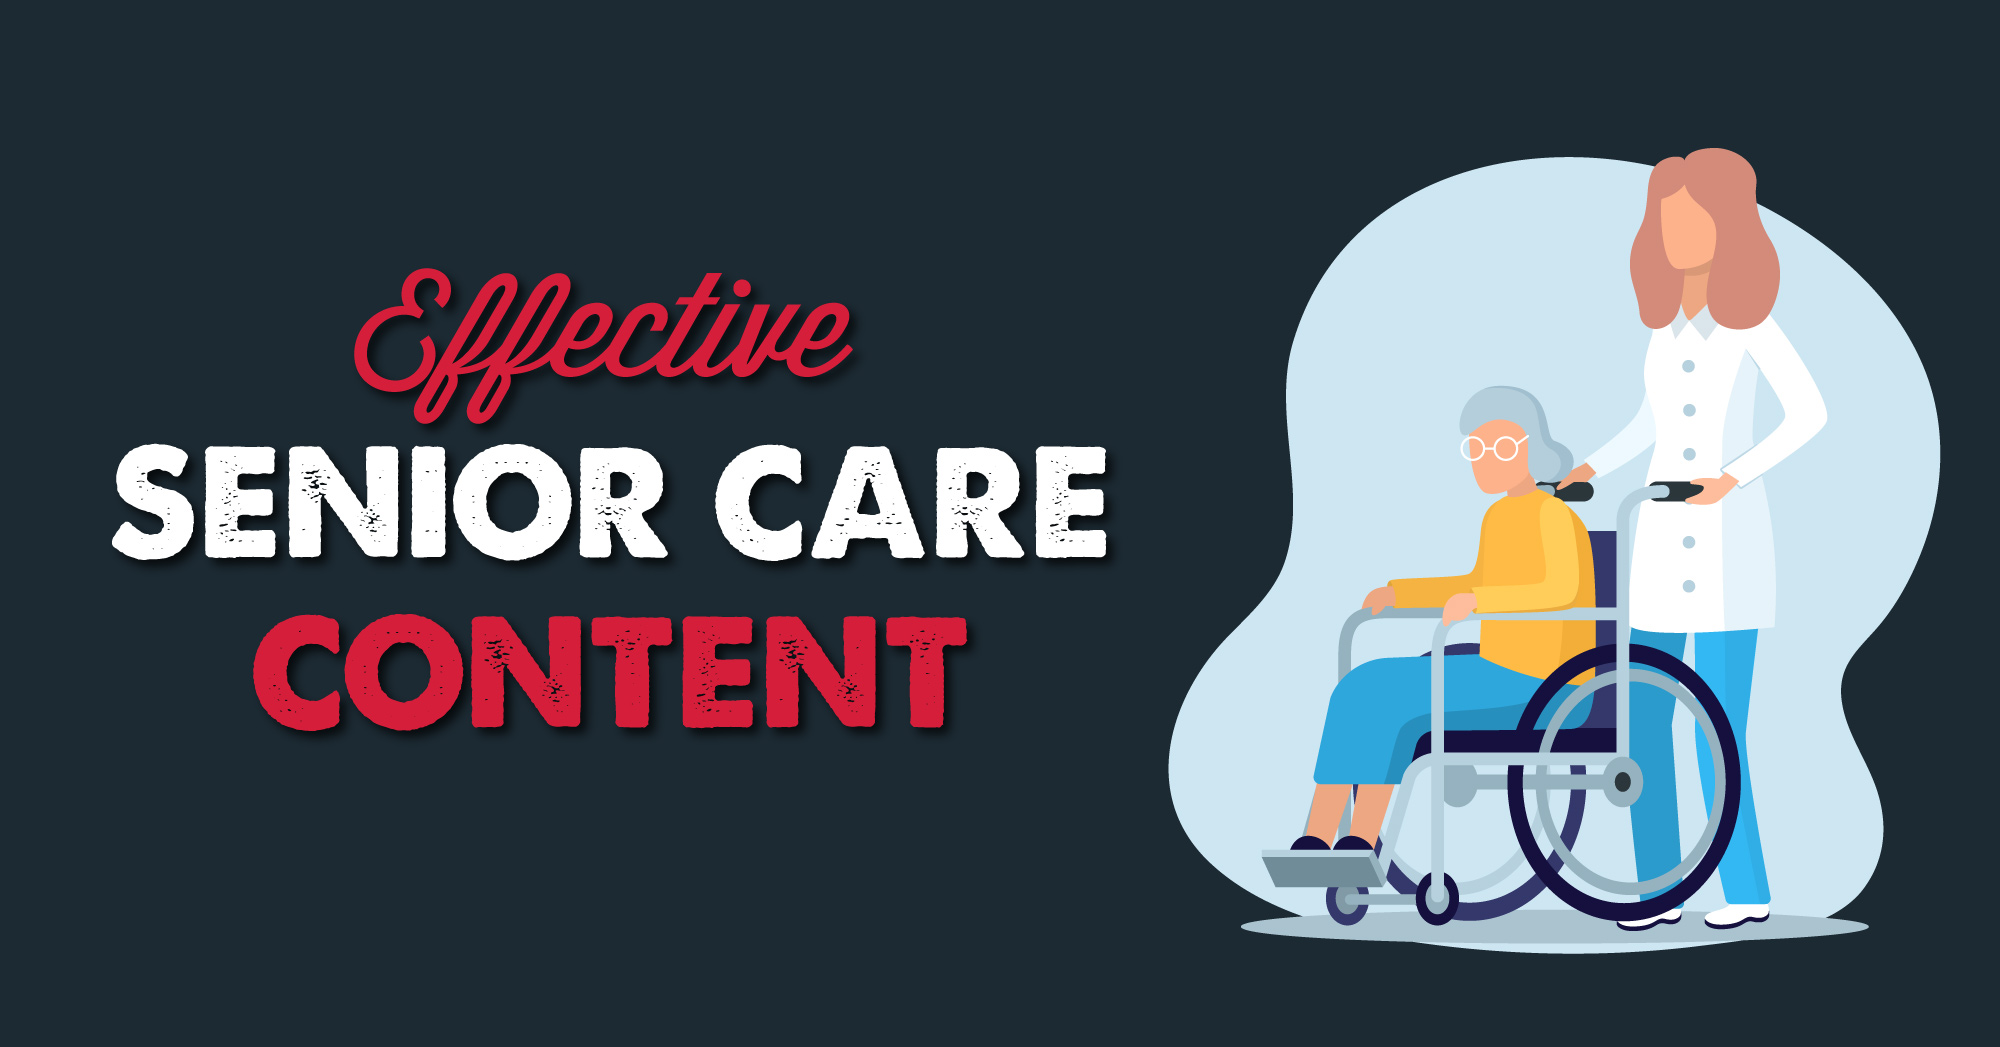 Effective senior care content